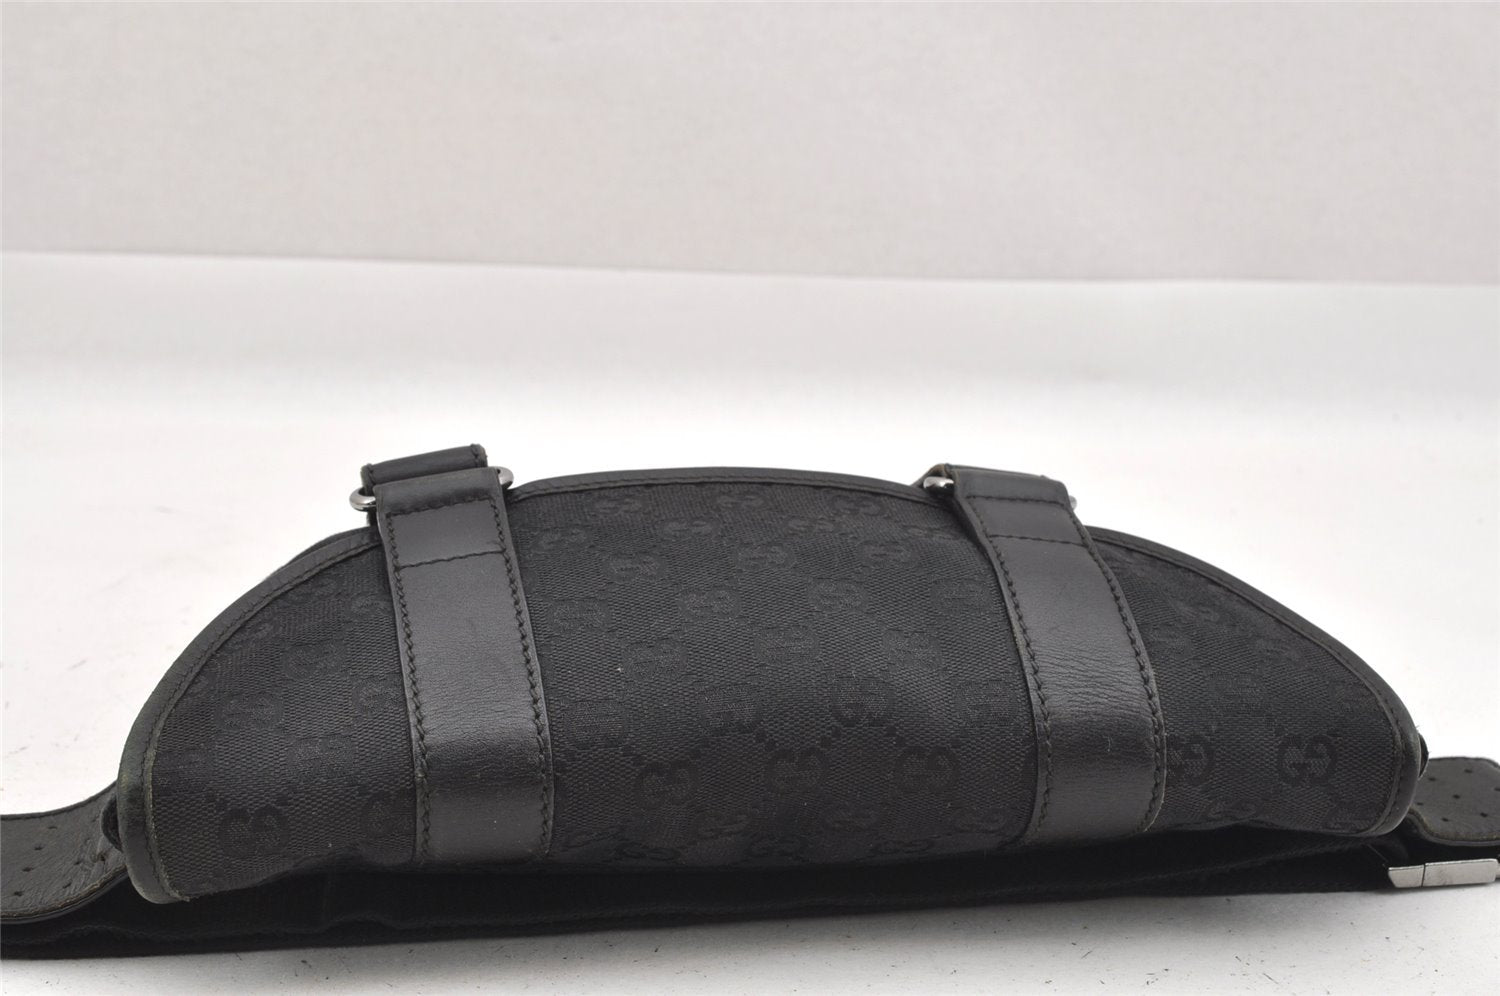 Authentic GUCCI Waist Body Bag Purse GG Canvas Leather 145851 Black 9965I